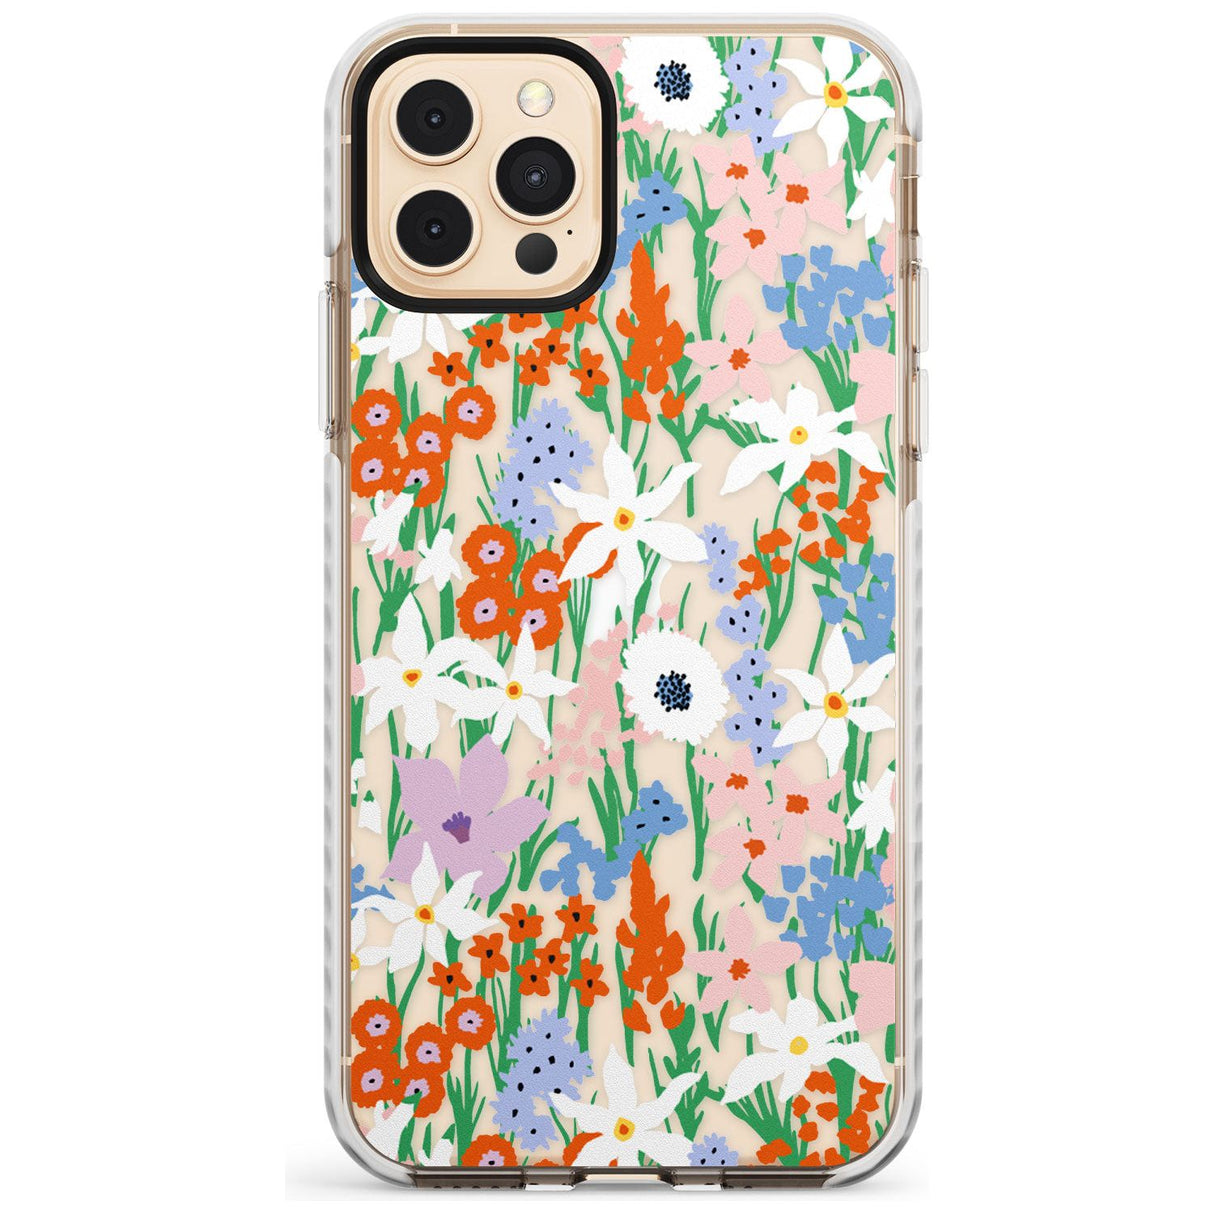 Springtime Meadow: Transparent Slim TPU Phone Case for iPhone 11 Pro Max